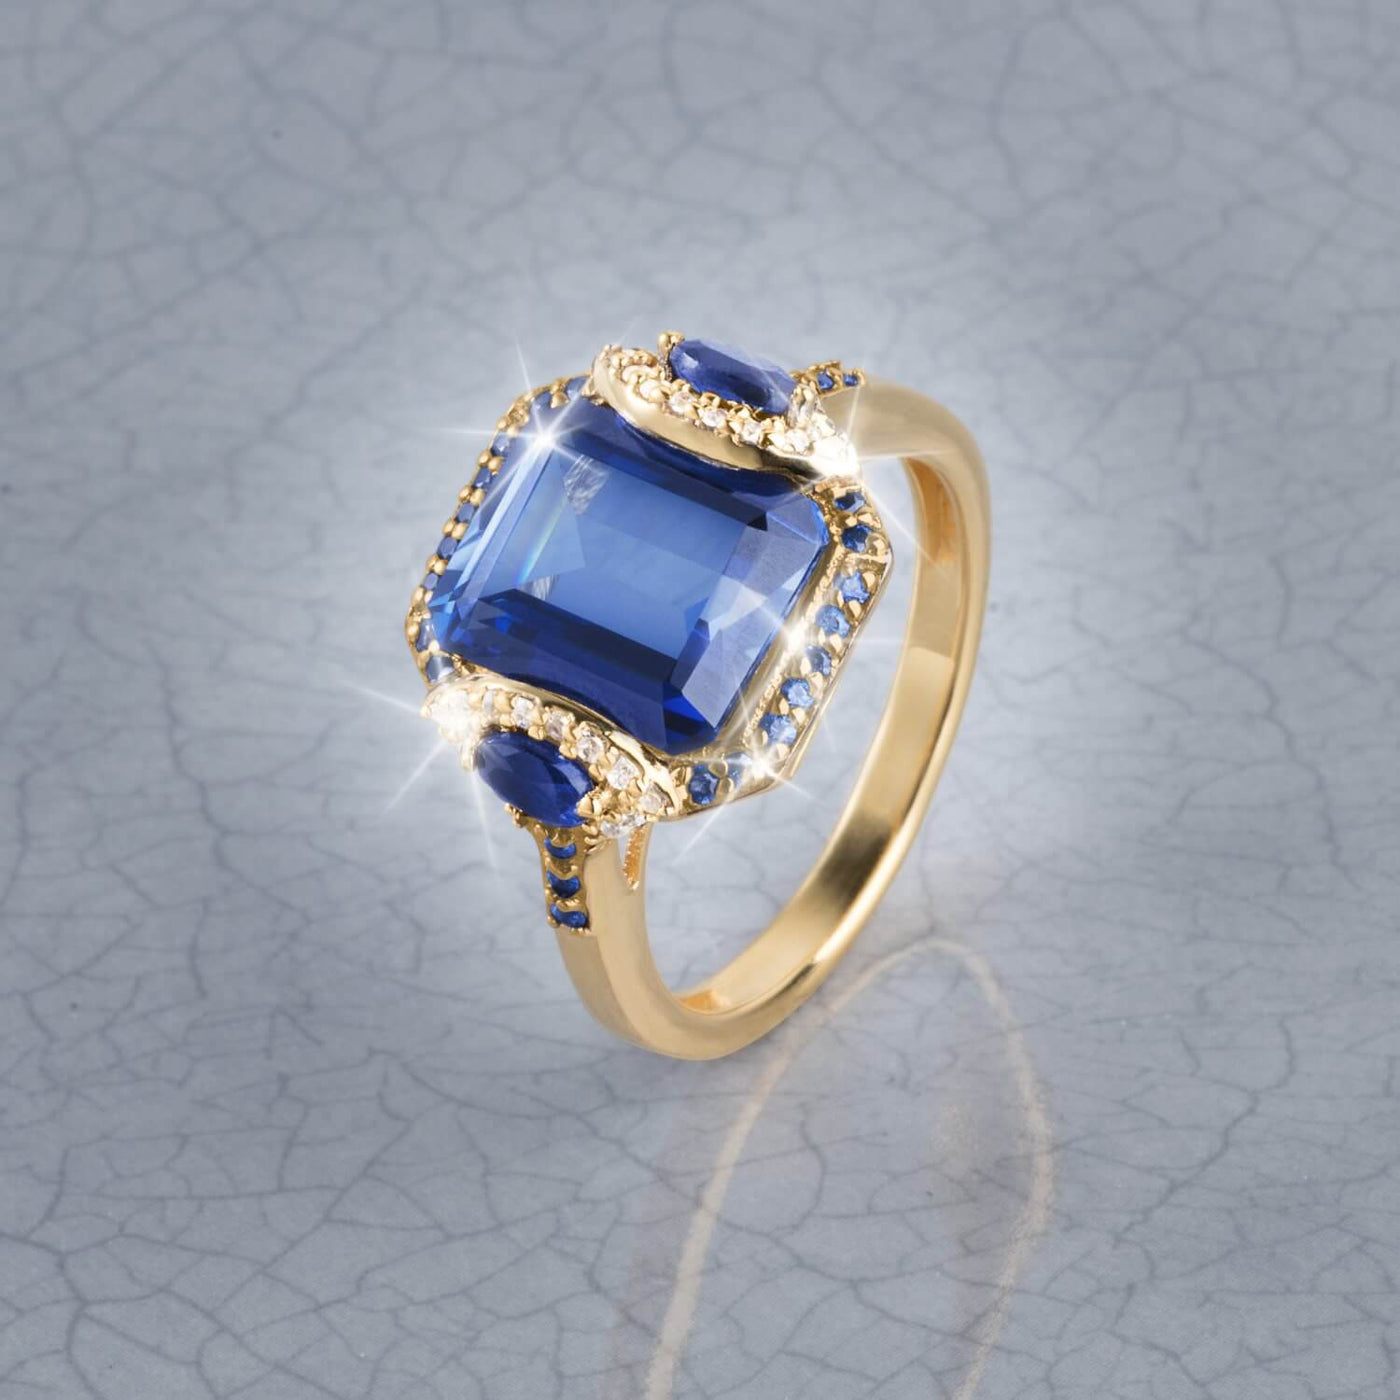 Daniel Steiger Manhattan Blue Ring